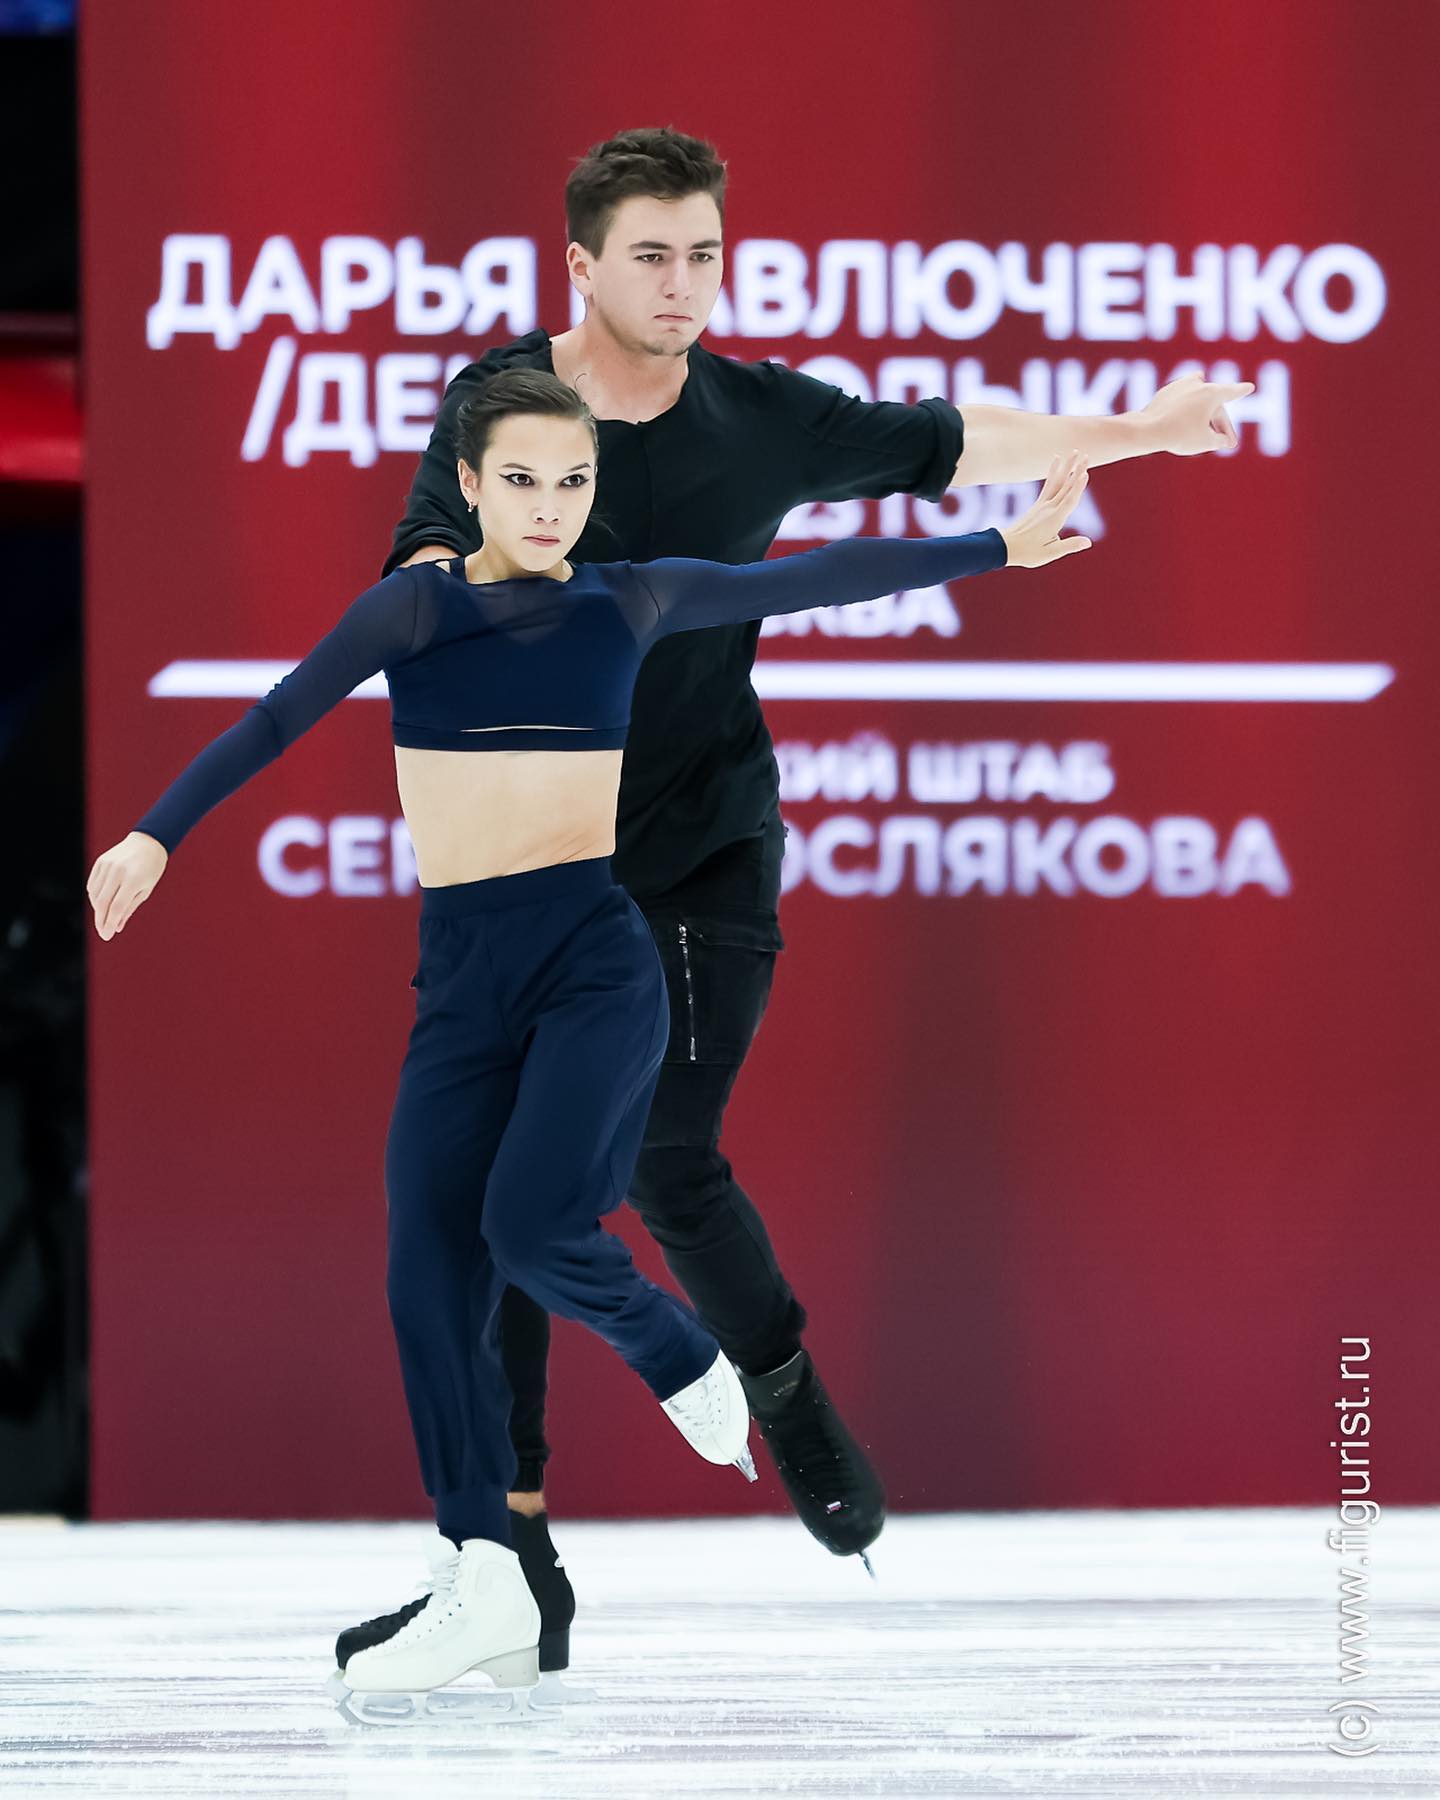 Дарья Павлюченко и Денис Ходыкин